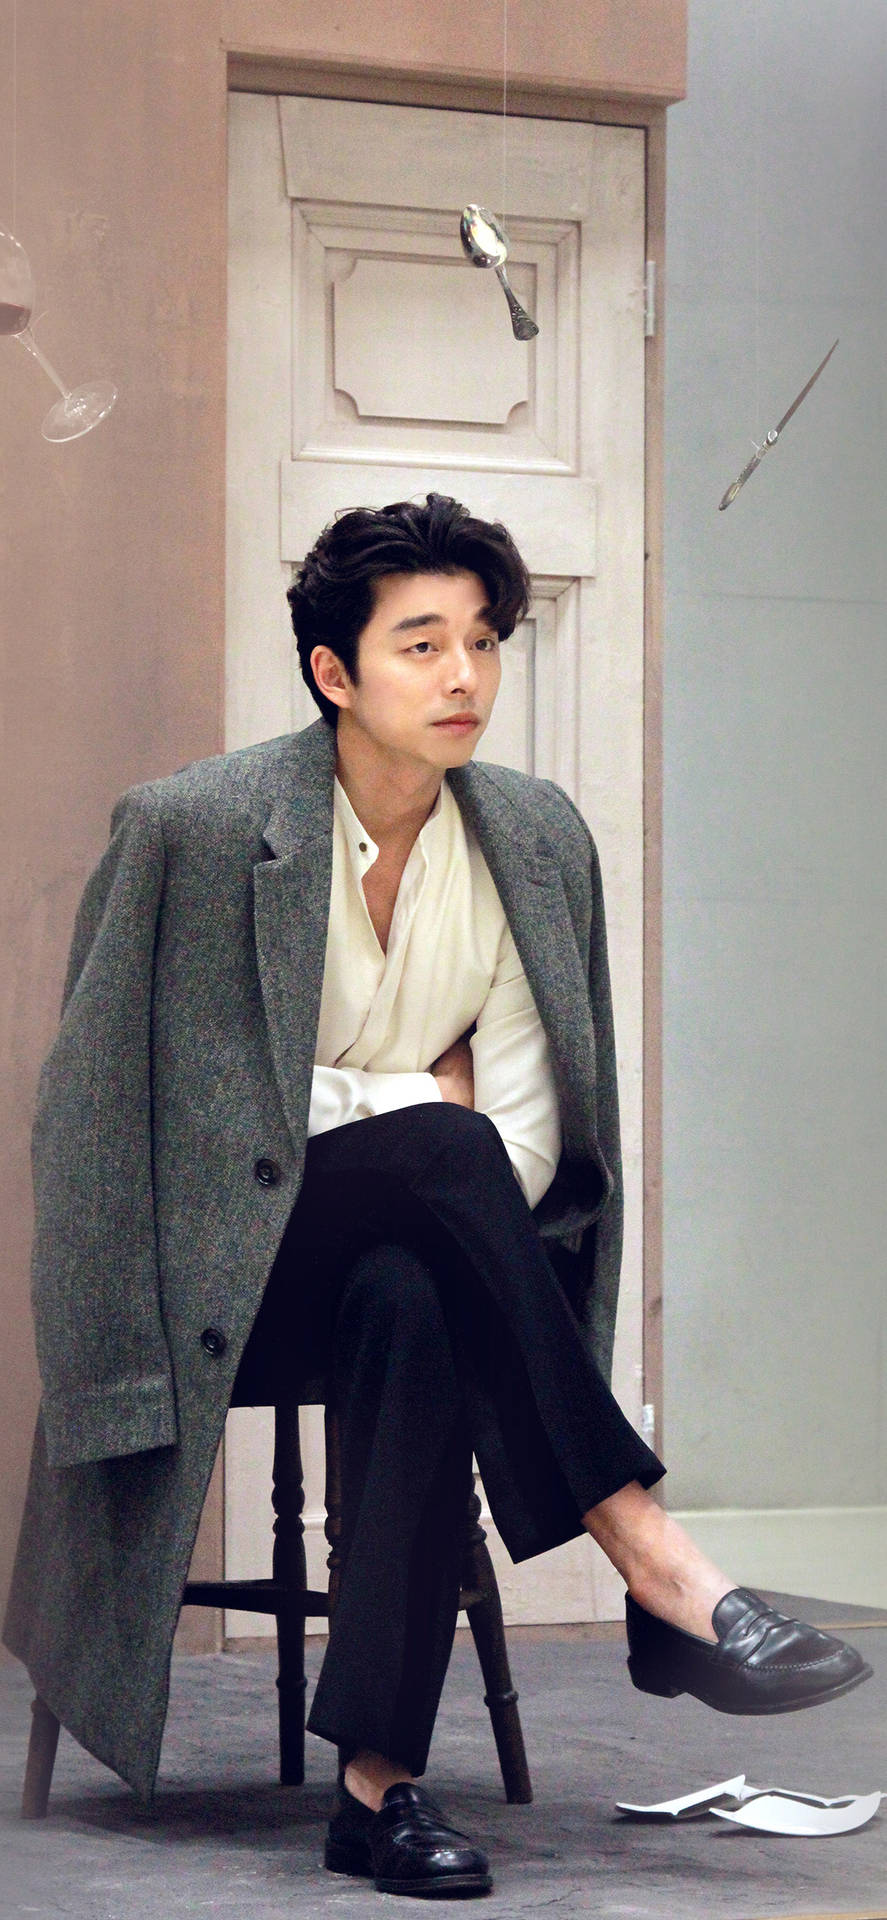 Enigmatic Portrait Of Gong Yoo, Notable Korean Actor